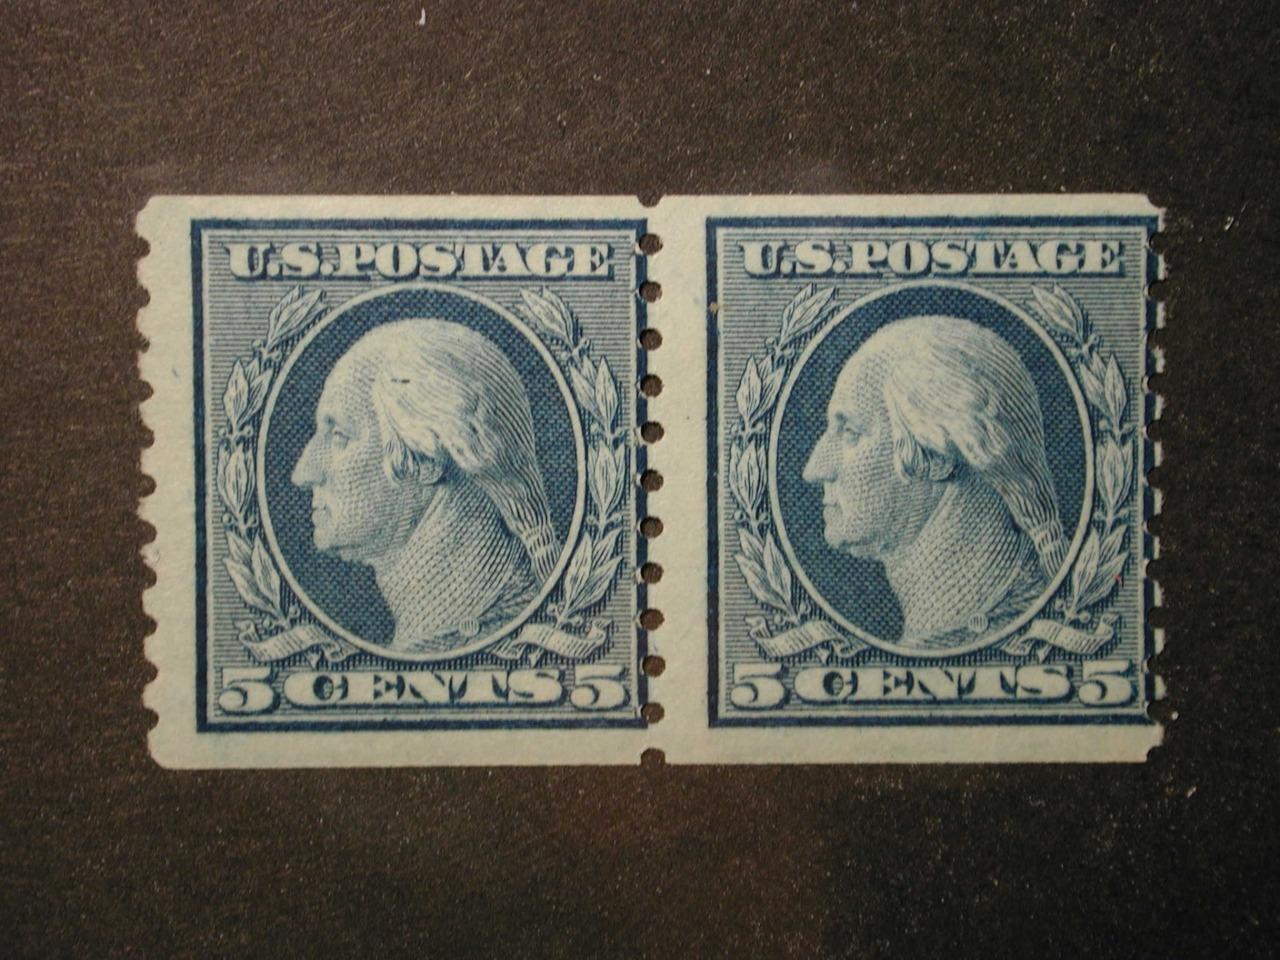 1914 - Blue Pair George Washington 5 Cent Stamp US #447 never hinged